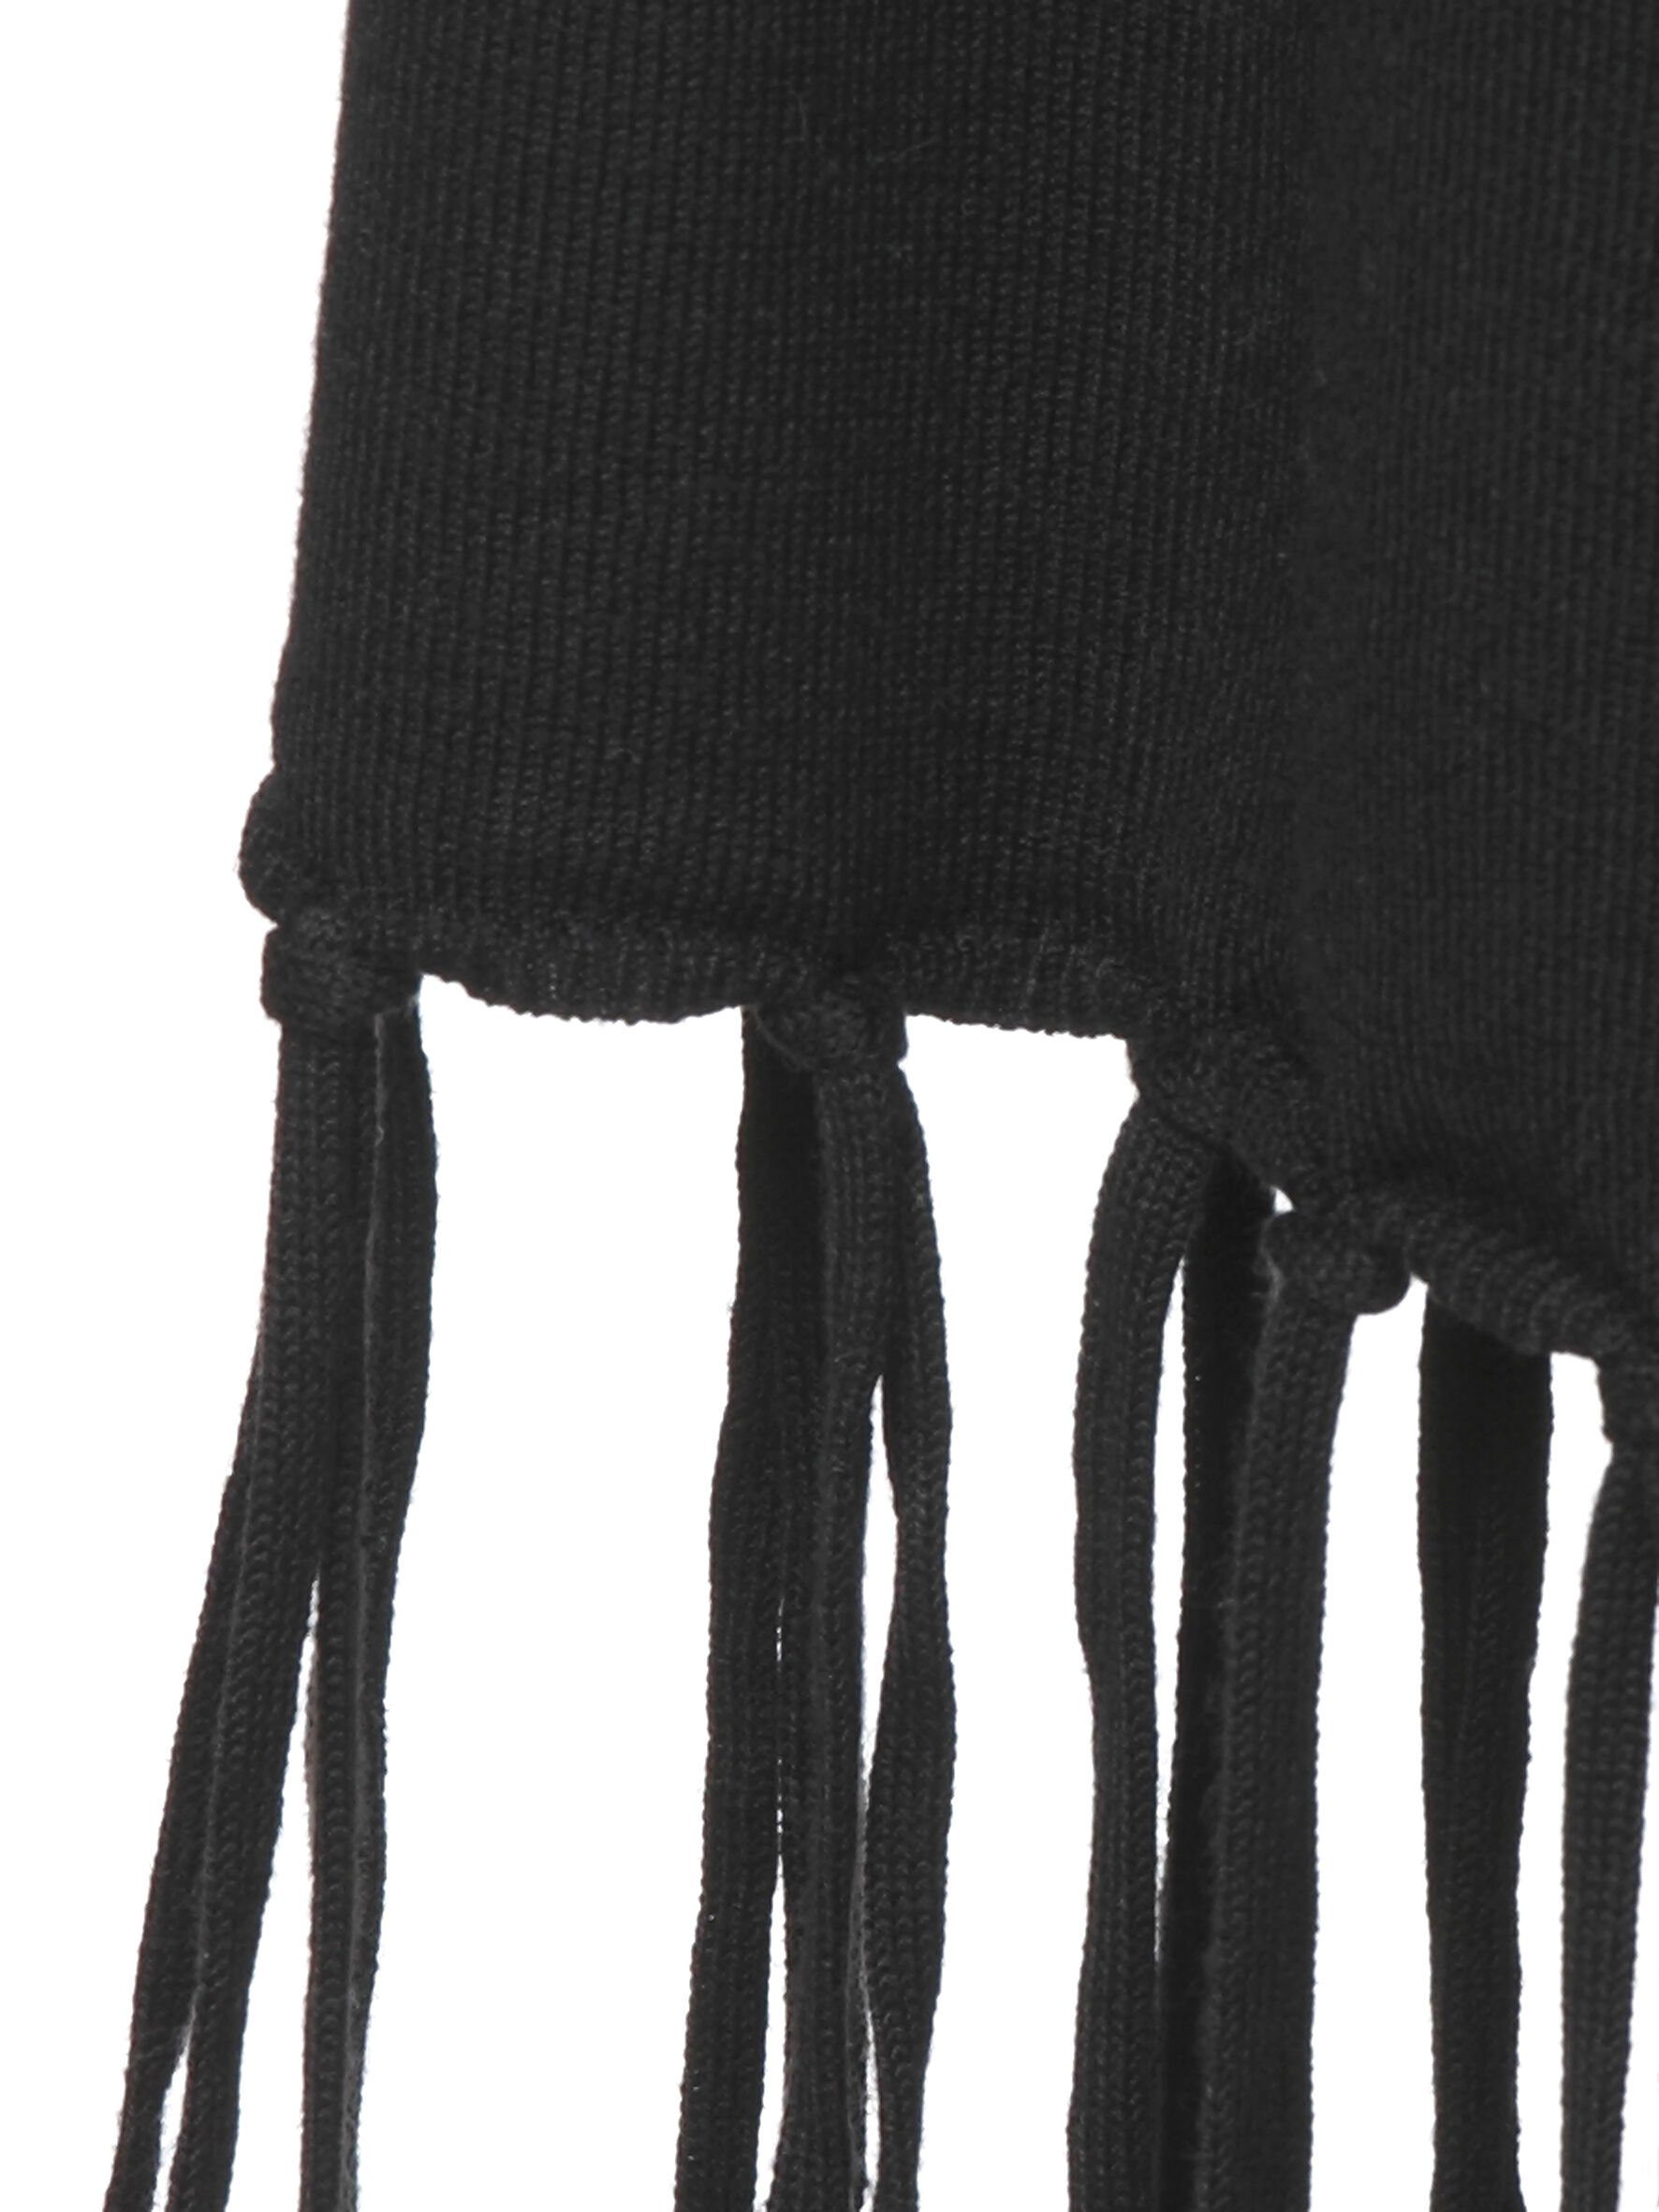 schwarz aus Unifarbener Strickjacke Strickjacke Stoff mit VIA DUE Rustikale unifarbenem Stil APPIA